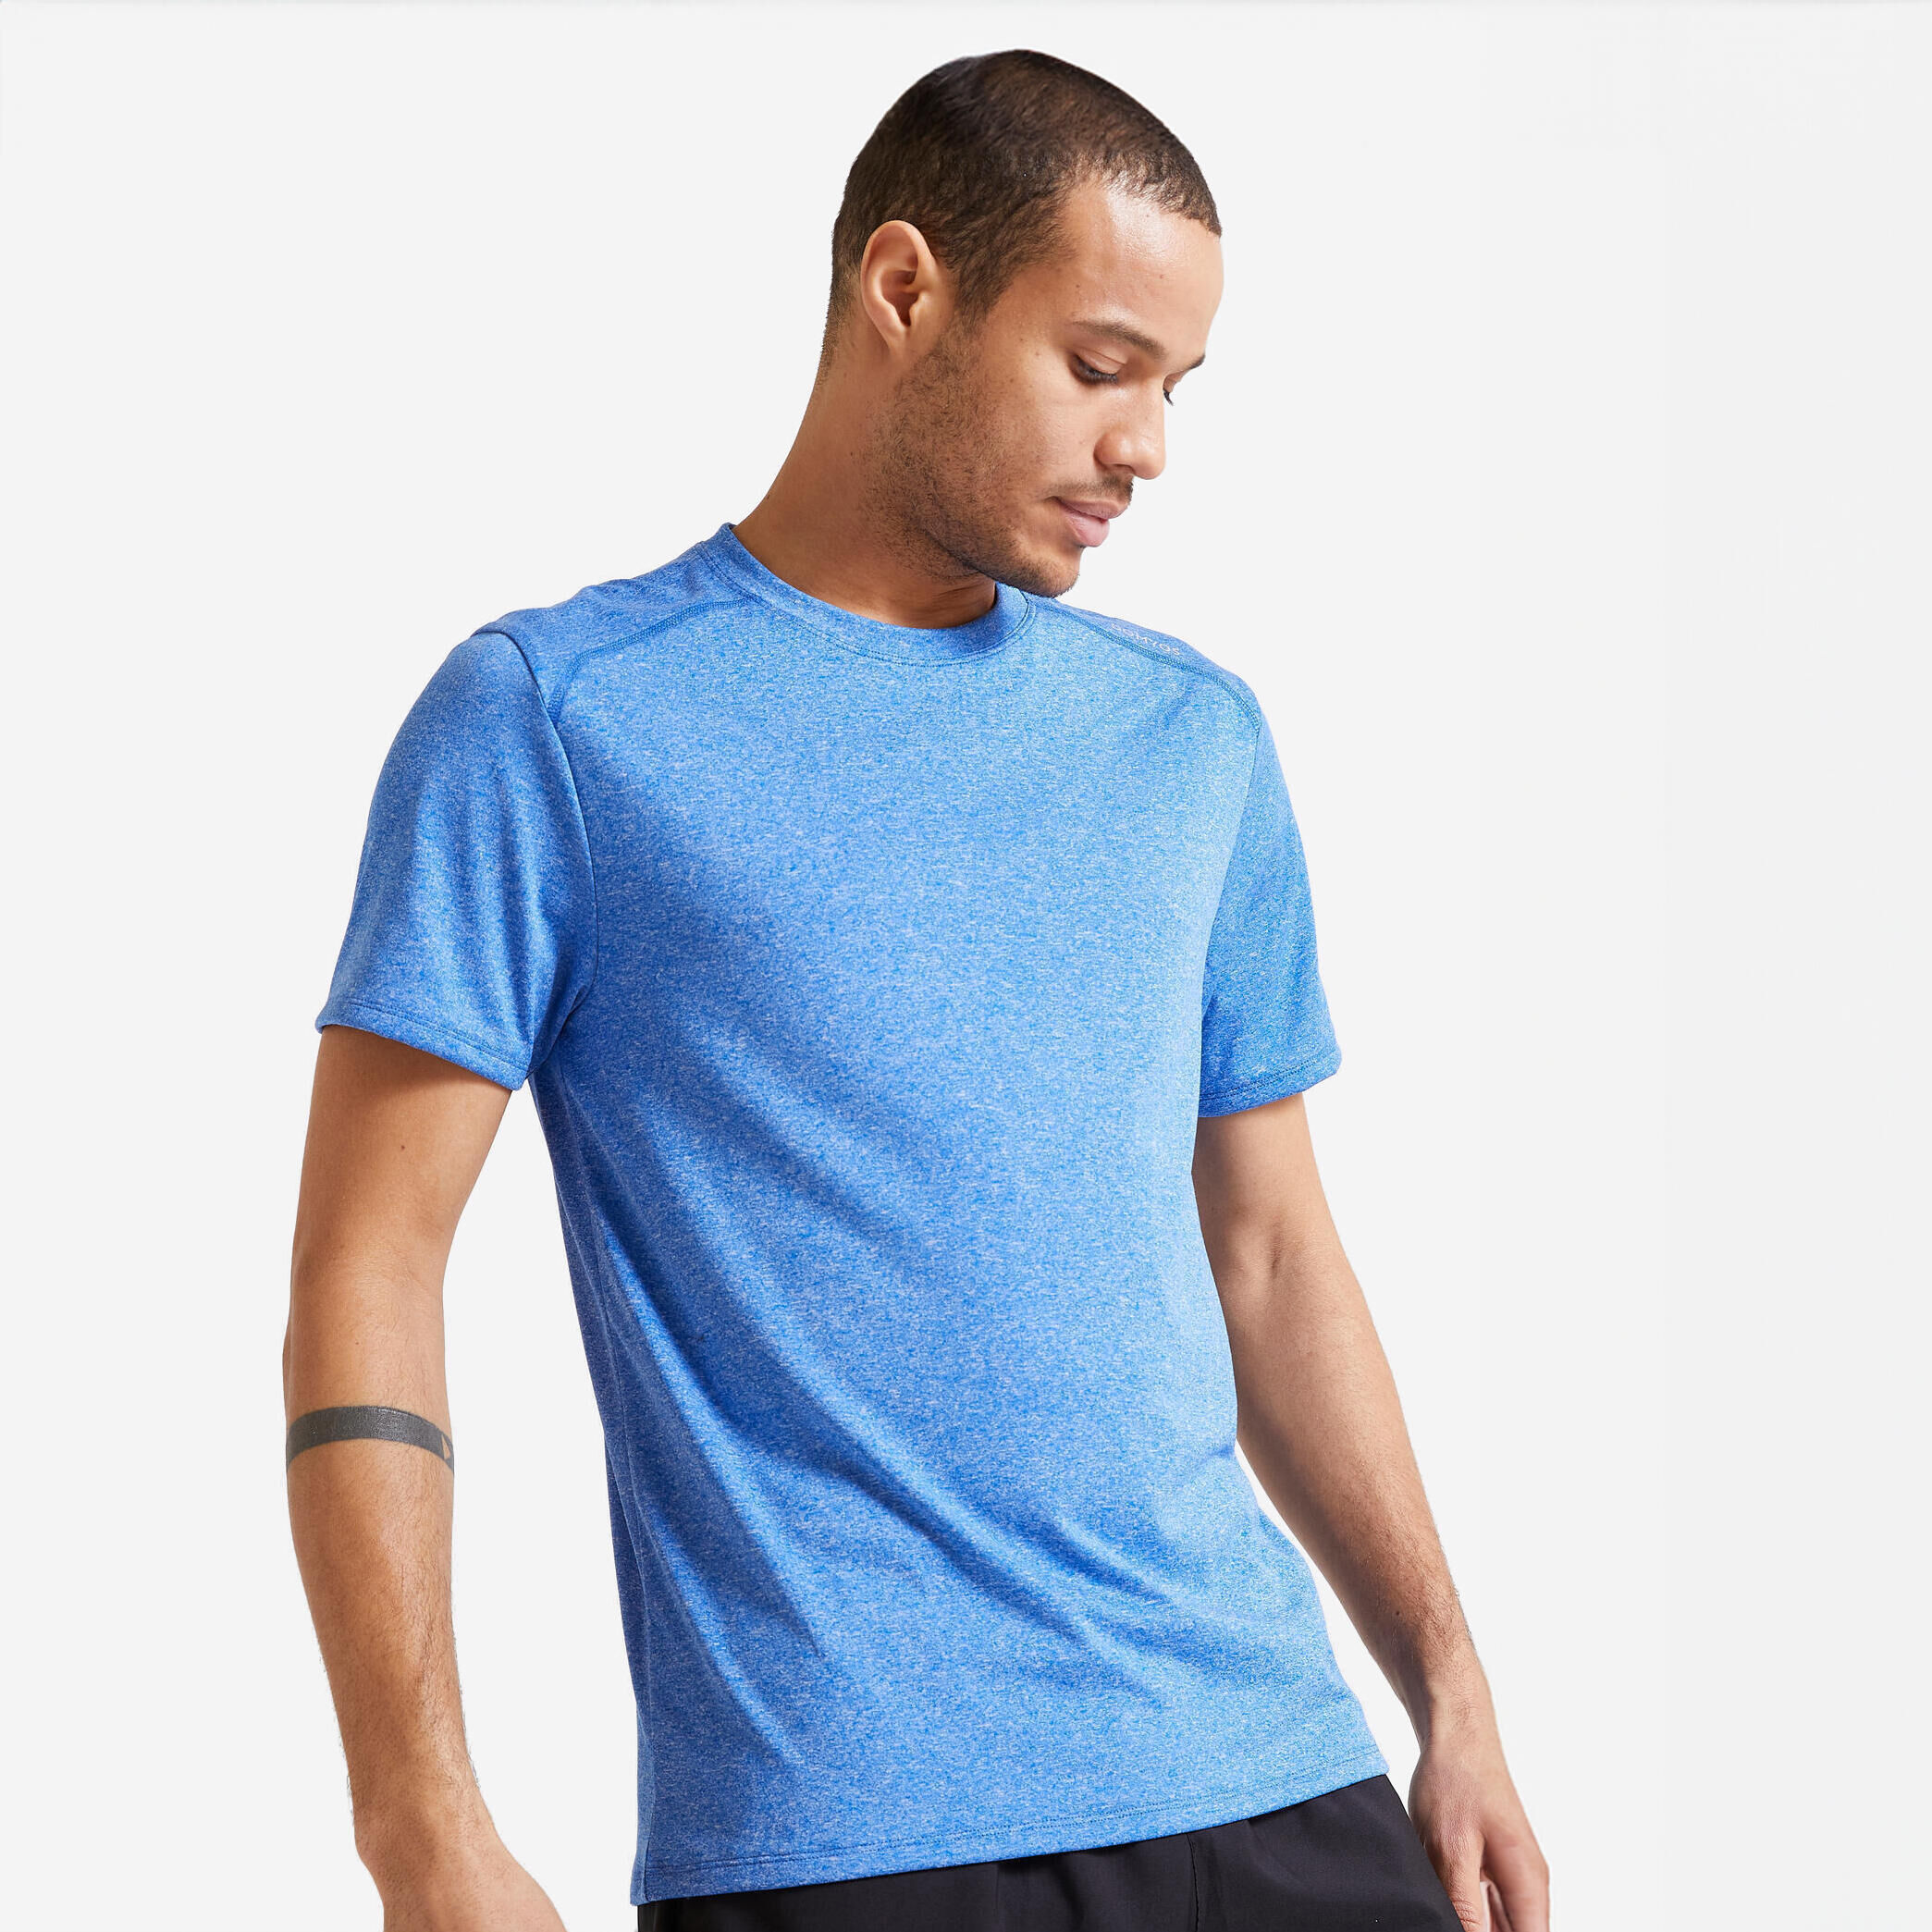 Men's Gym Activewear T-Shirts & Tops